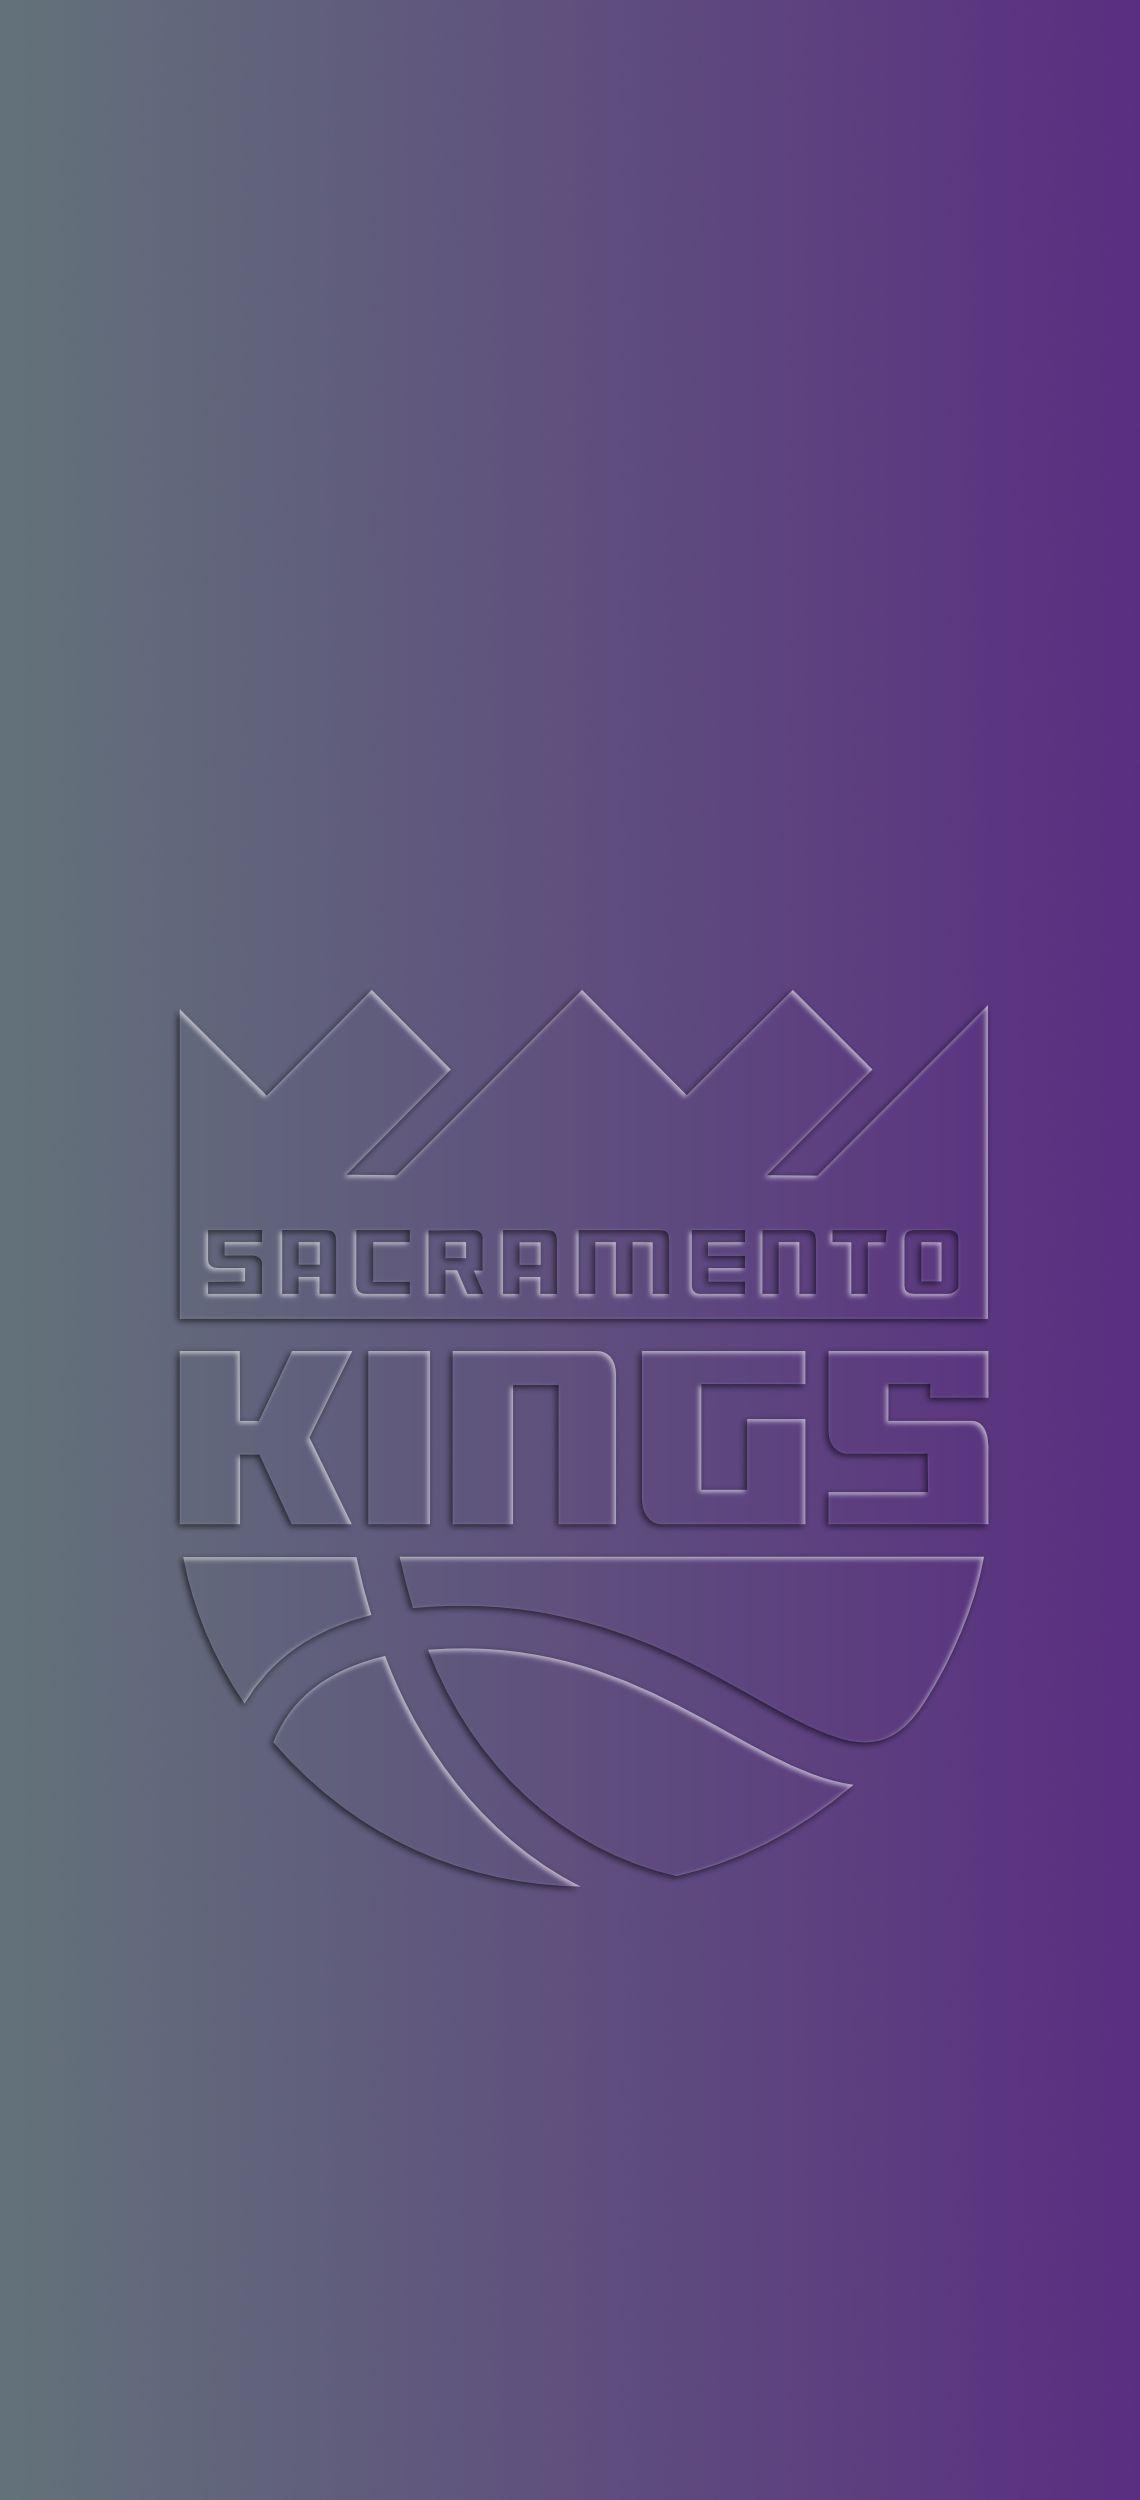 Sacramento Kings Wallpapers  Basketball Wallpapers at BasketWallpaperscom   Page 2